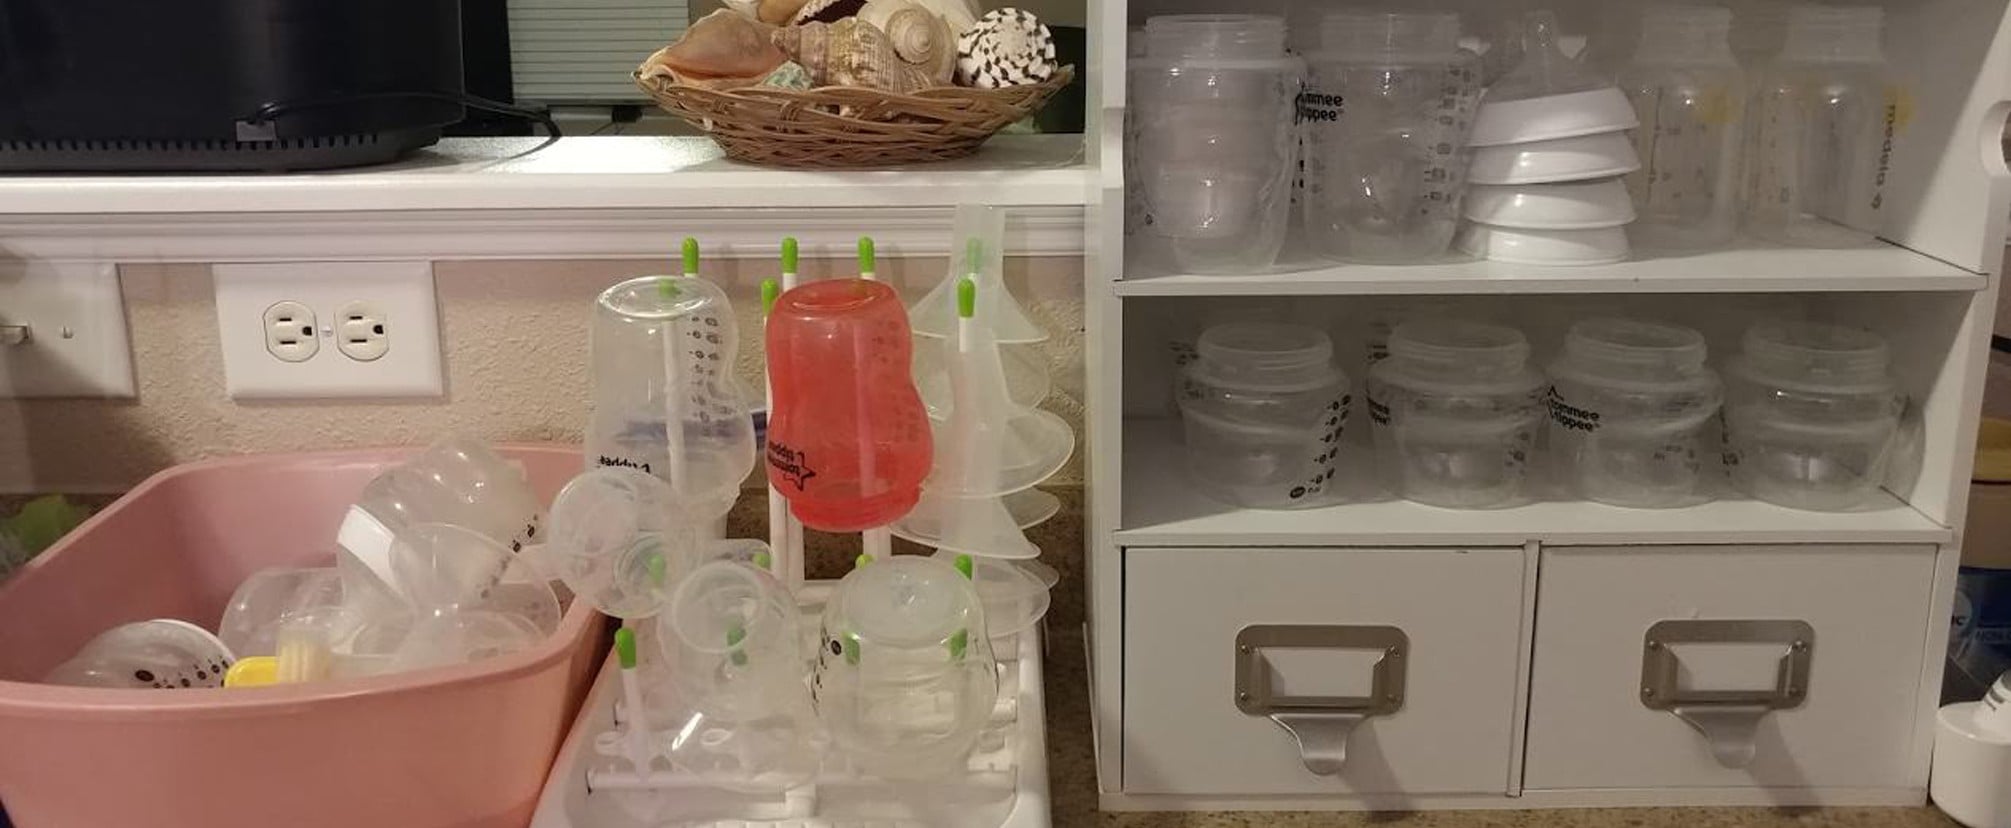 Organized Baby Bottle Station for an organized kitchen